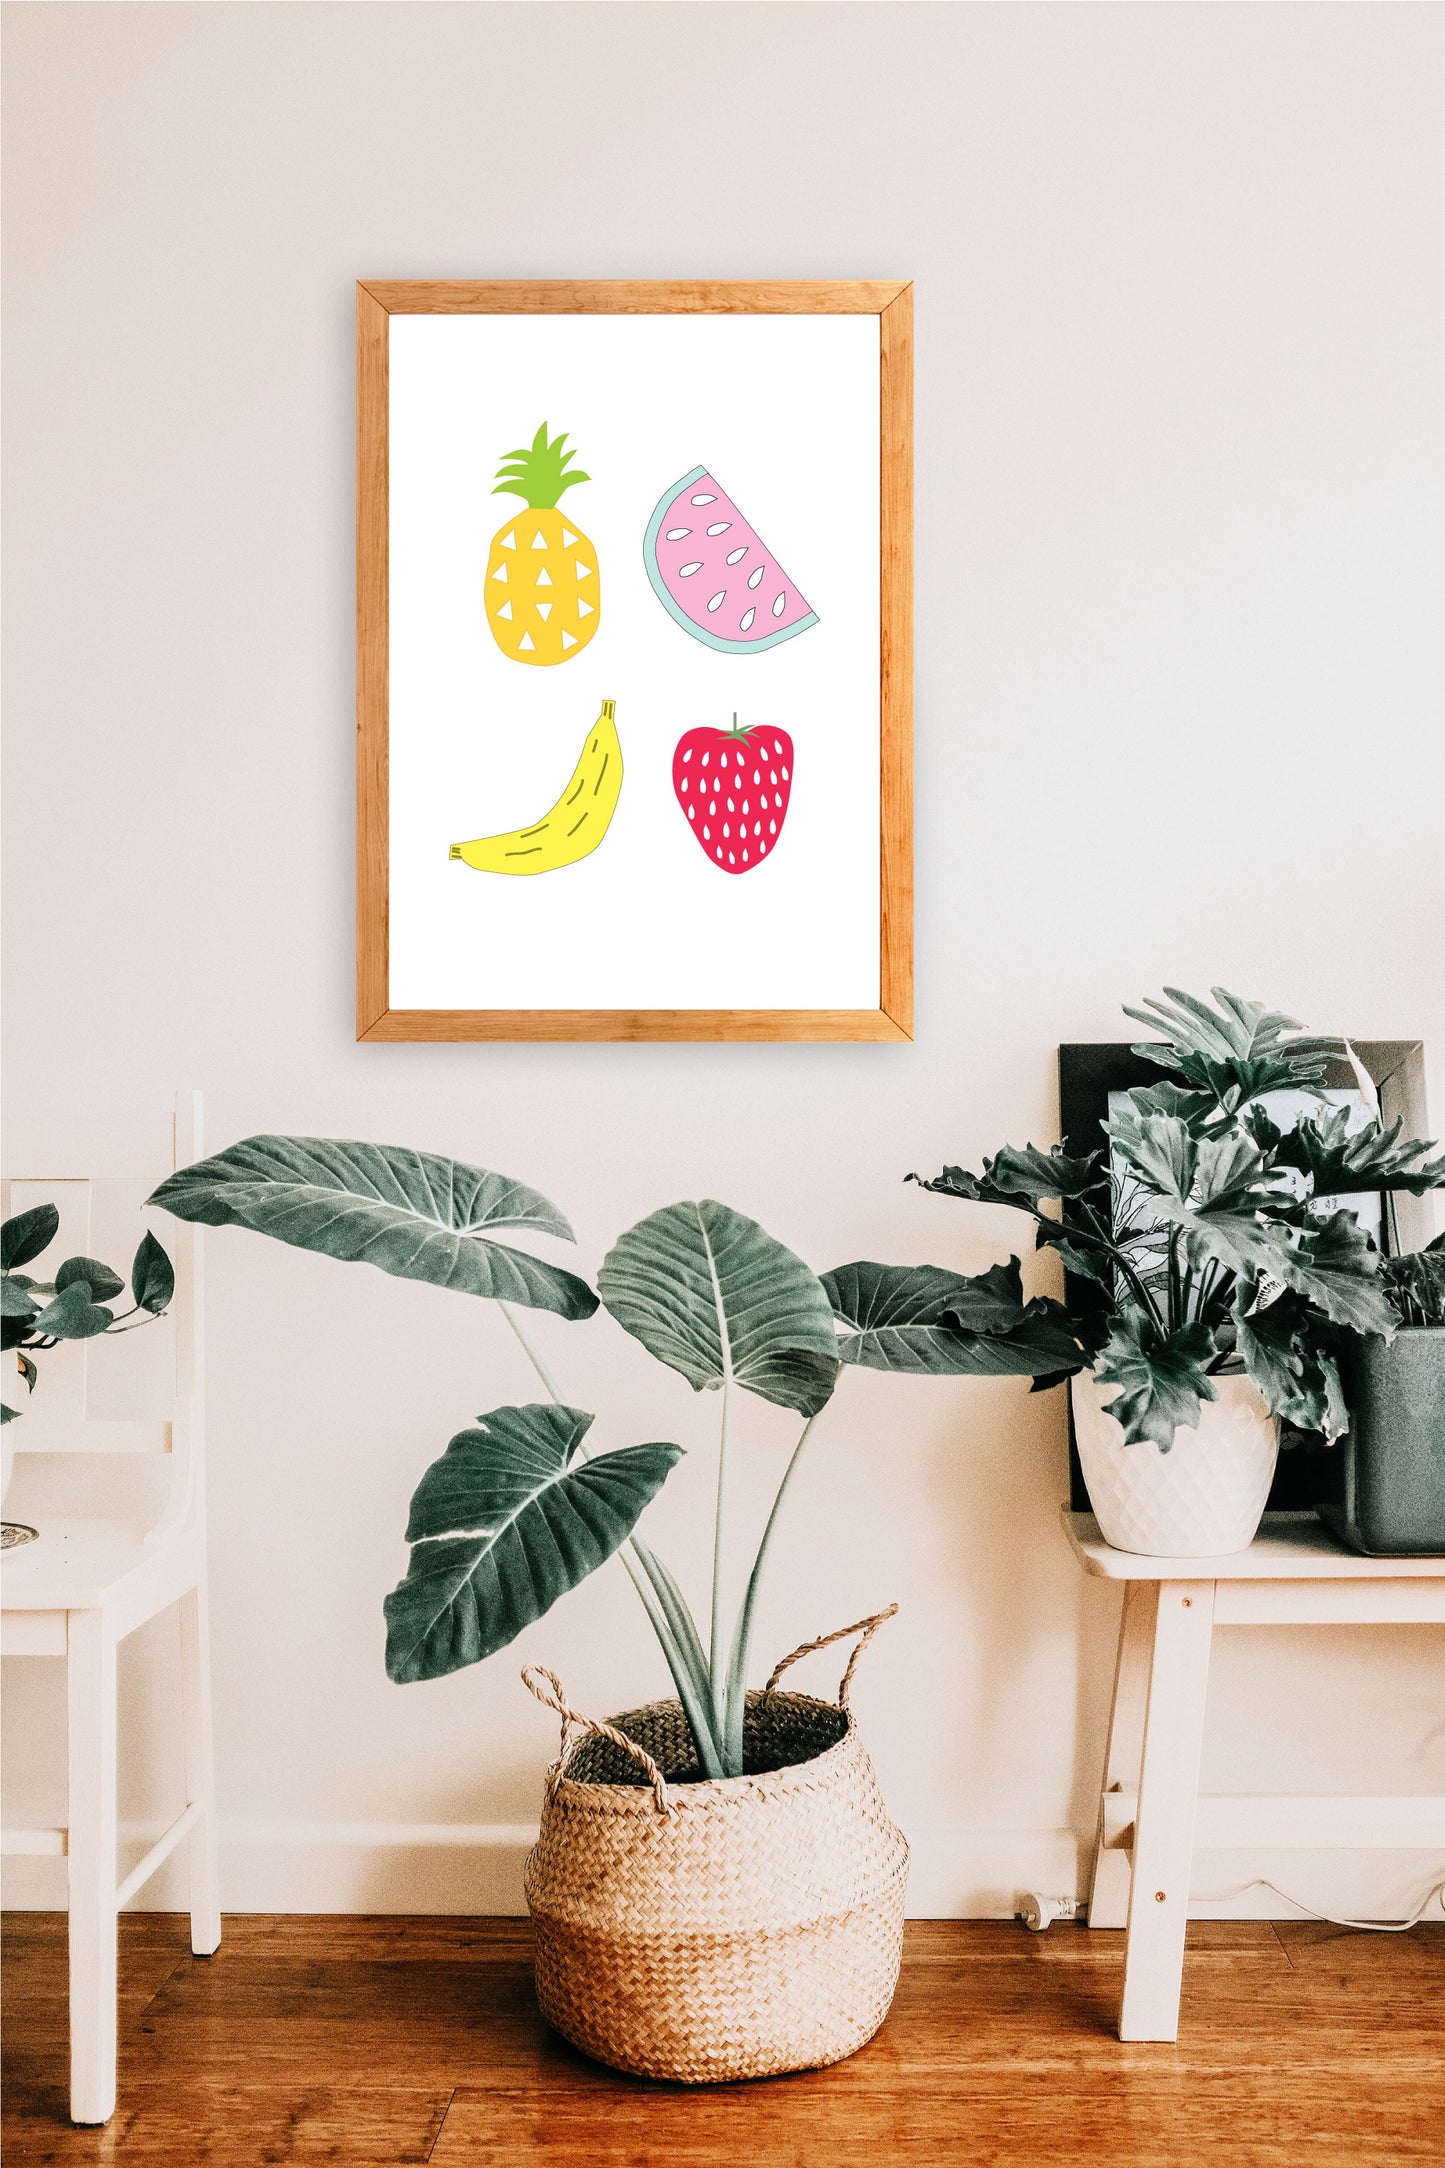 Printable Wall Art / A1 Size / Fruity Fun Illustration